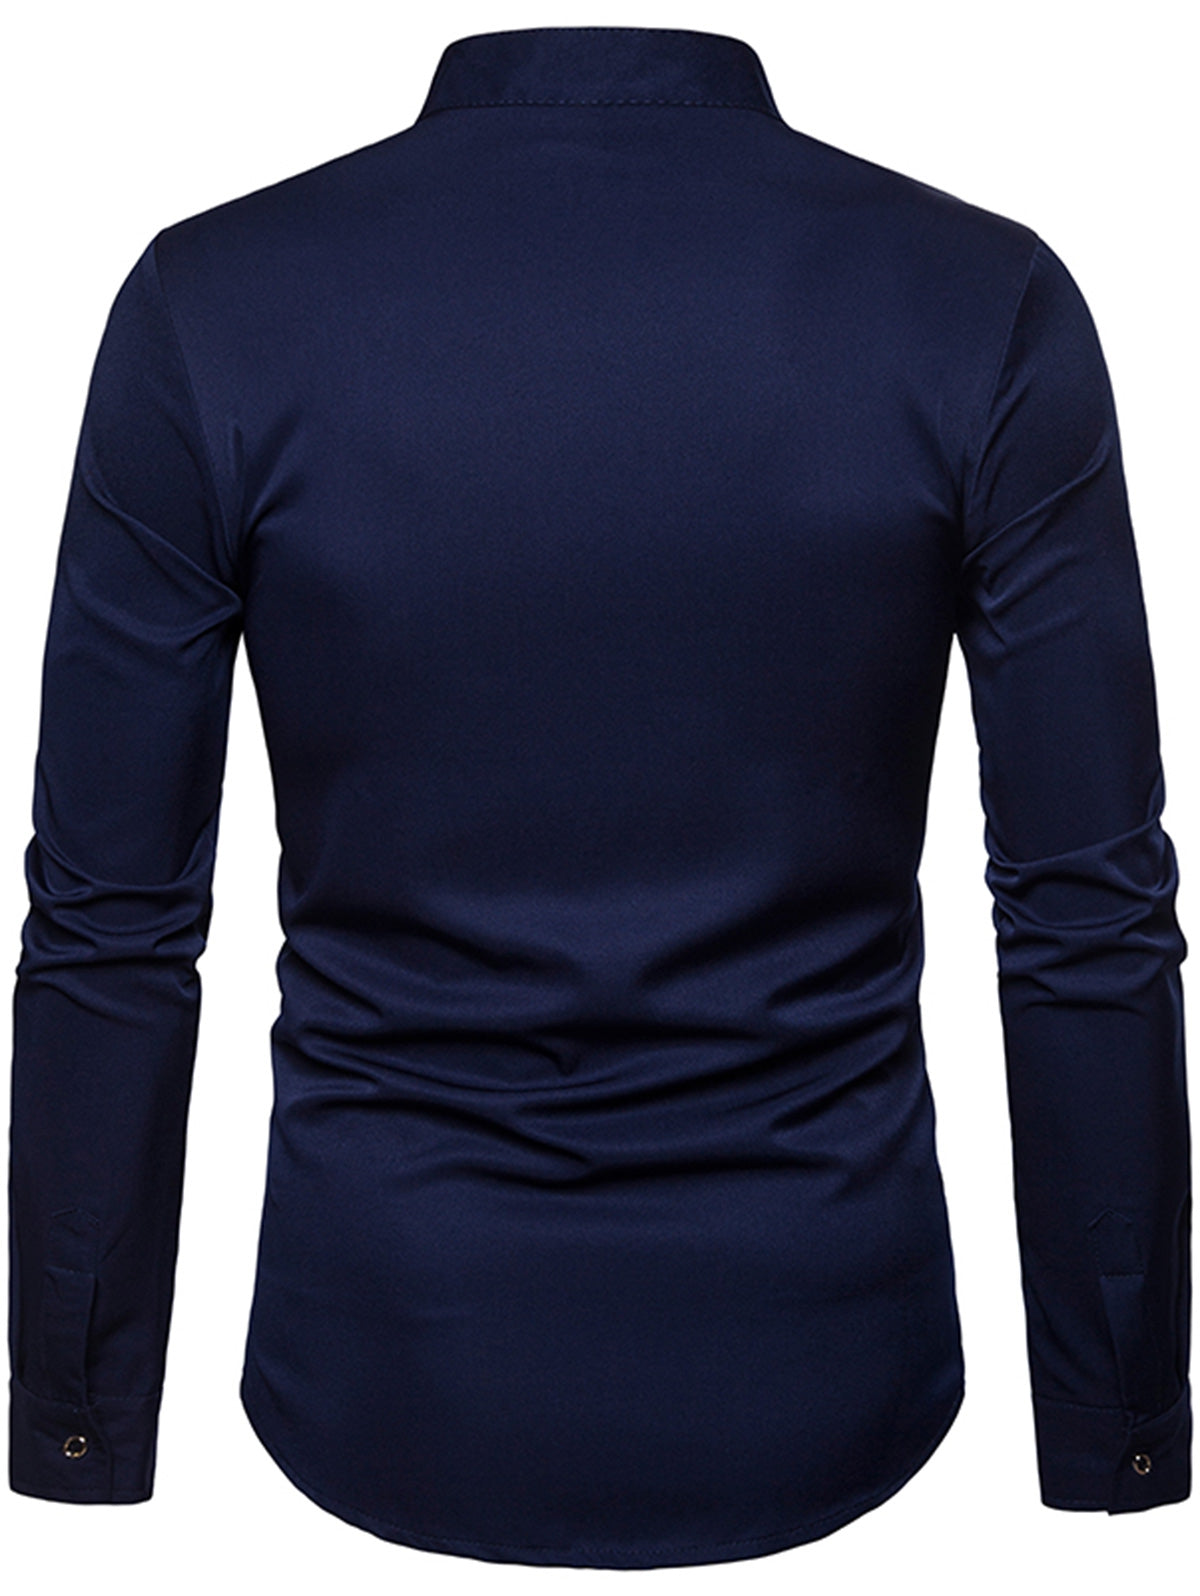 Men's Turndown Collar Embroidered Design Slim Fit Shirt